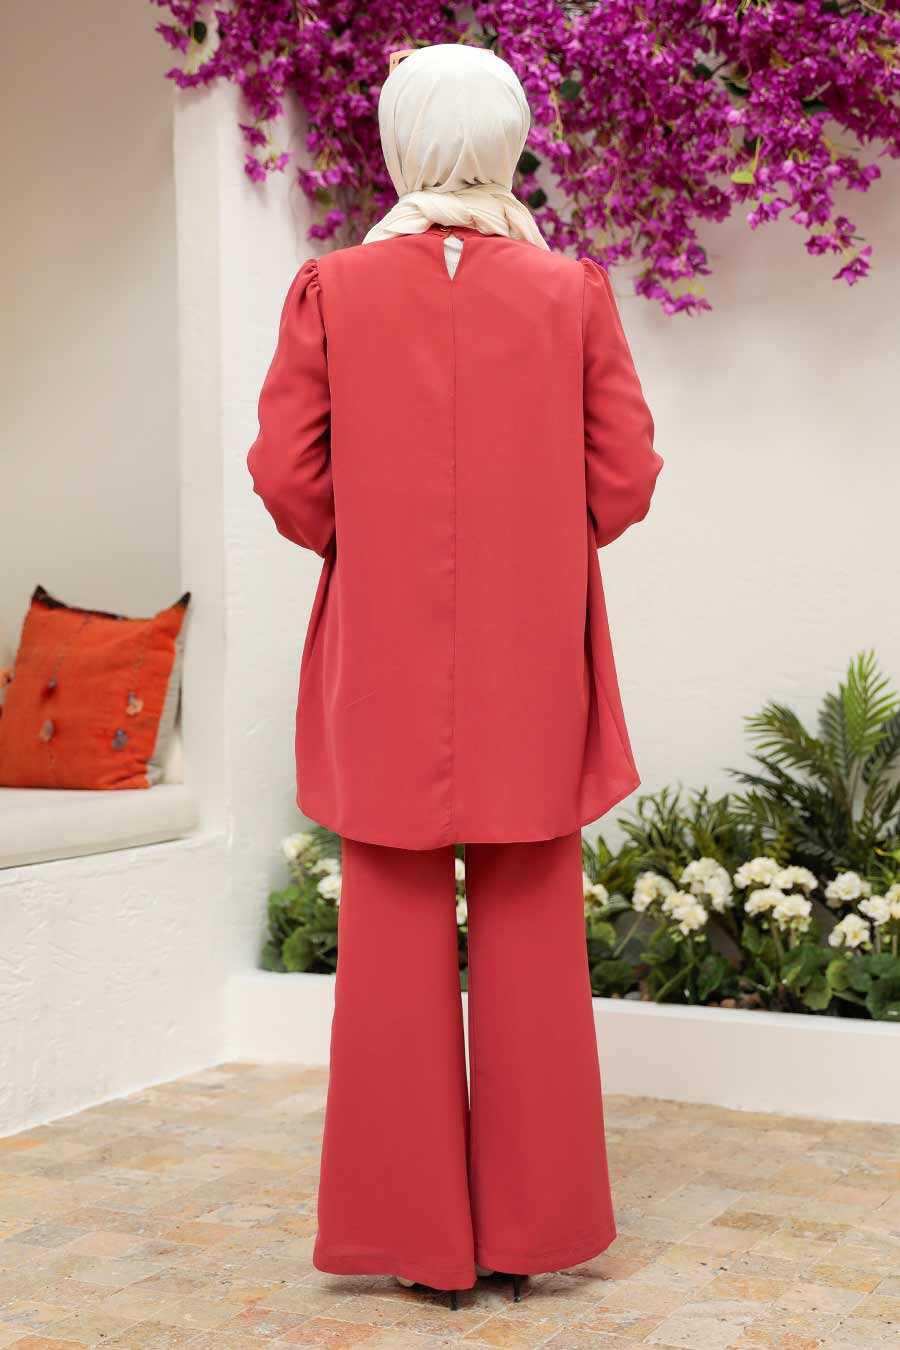 Pomegranate Flower Hijab Suit Dress 56835NC - Neva-style.com